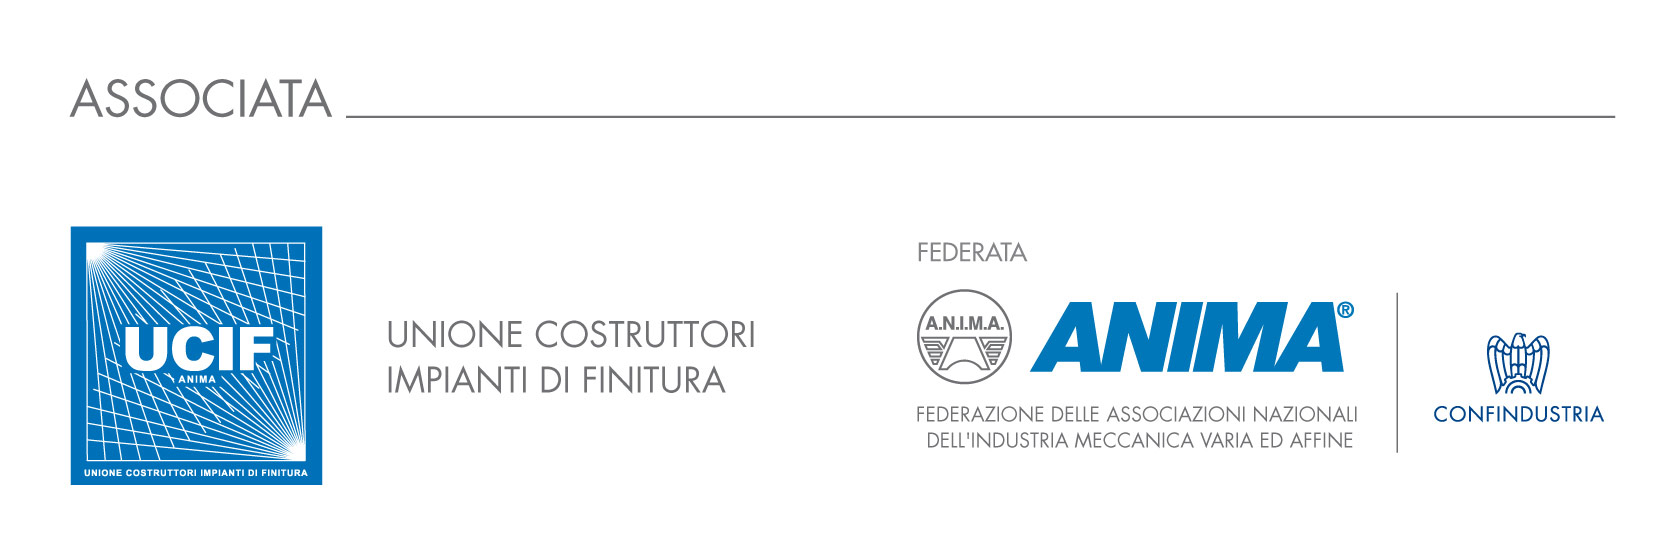 UCIF logo associata